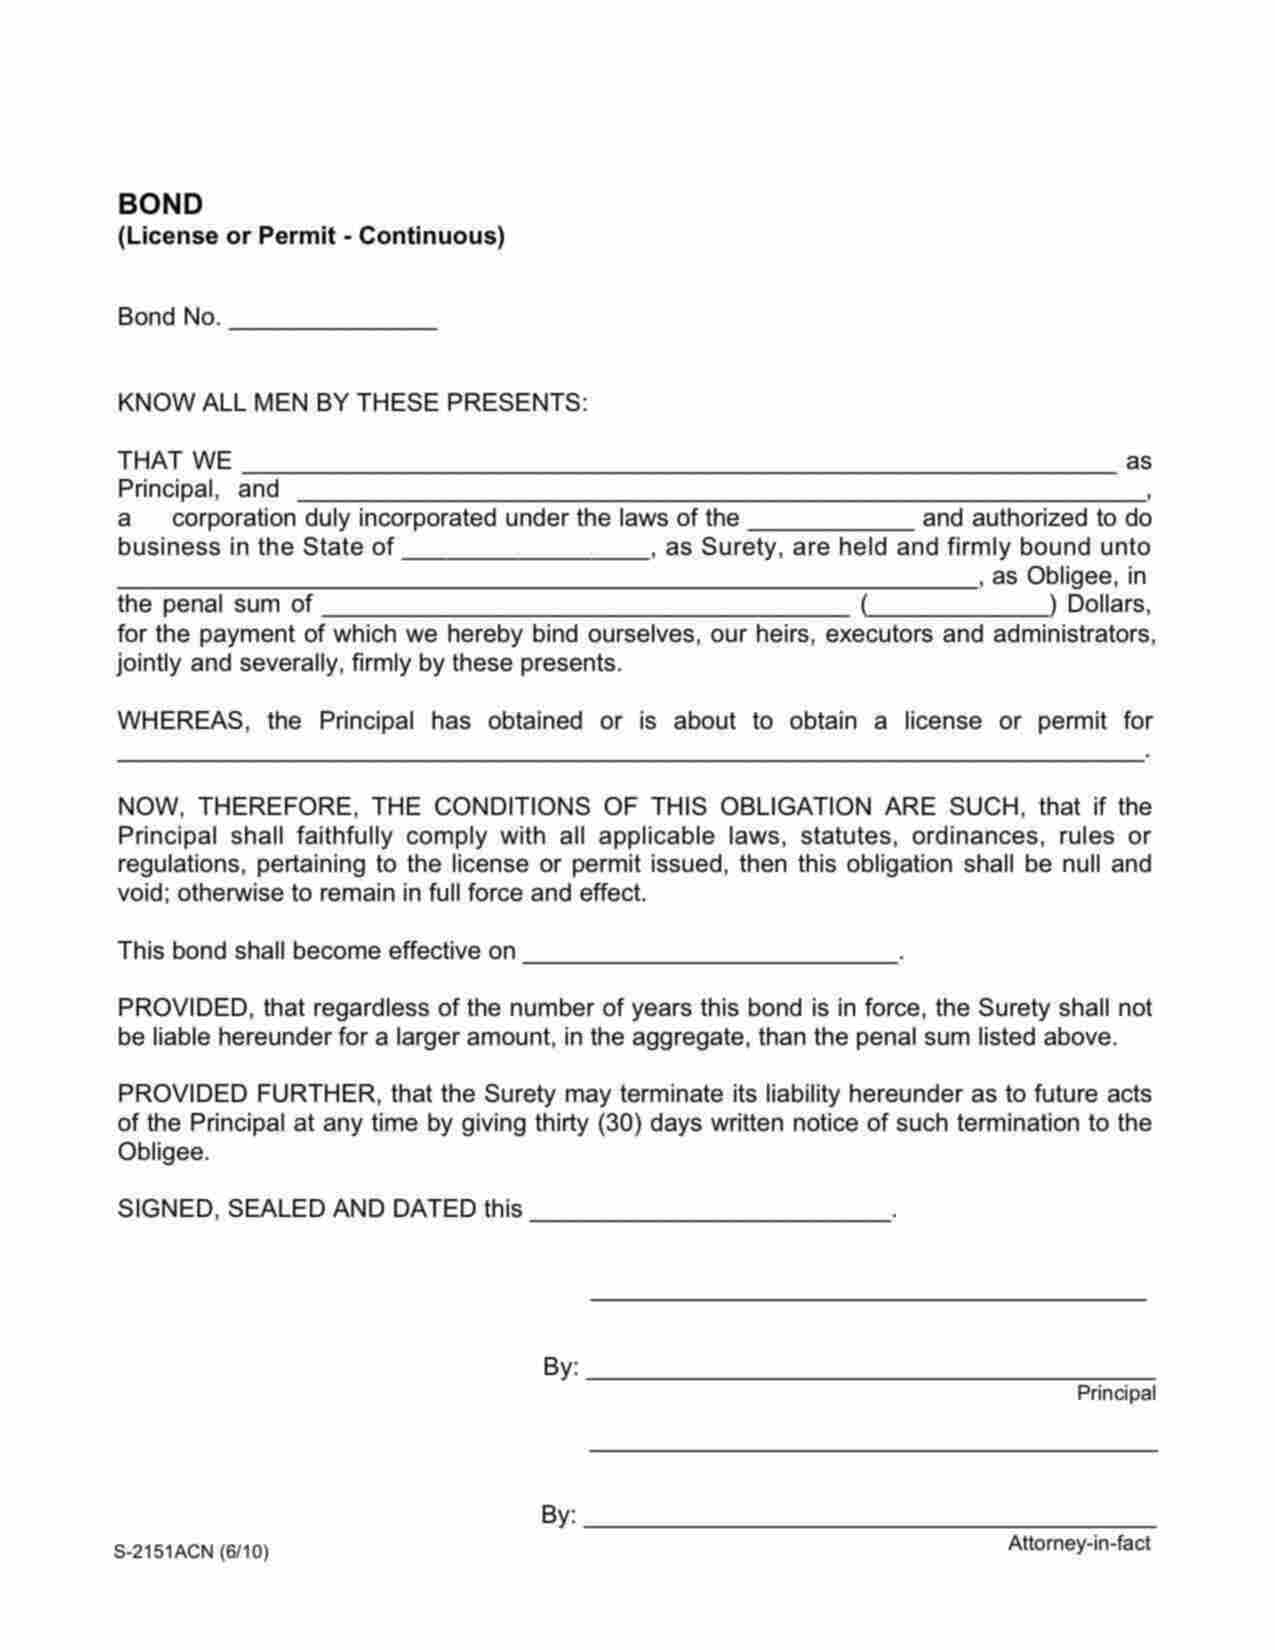 Kansas License/Permit Bond Form